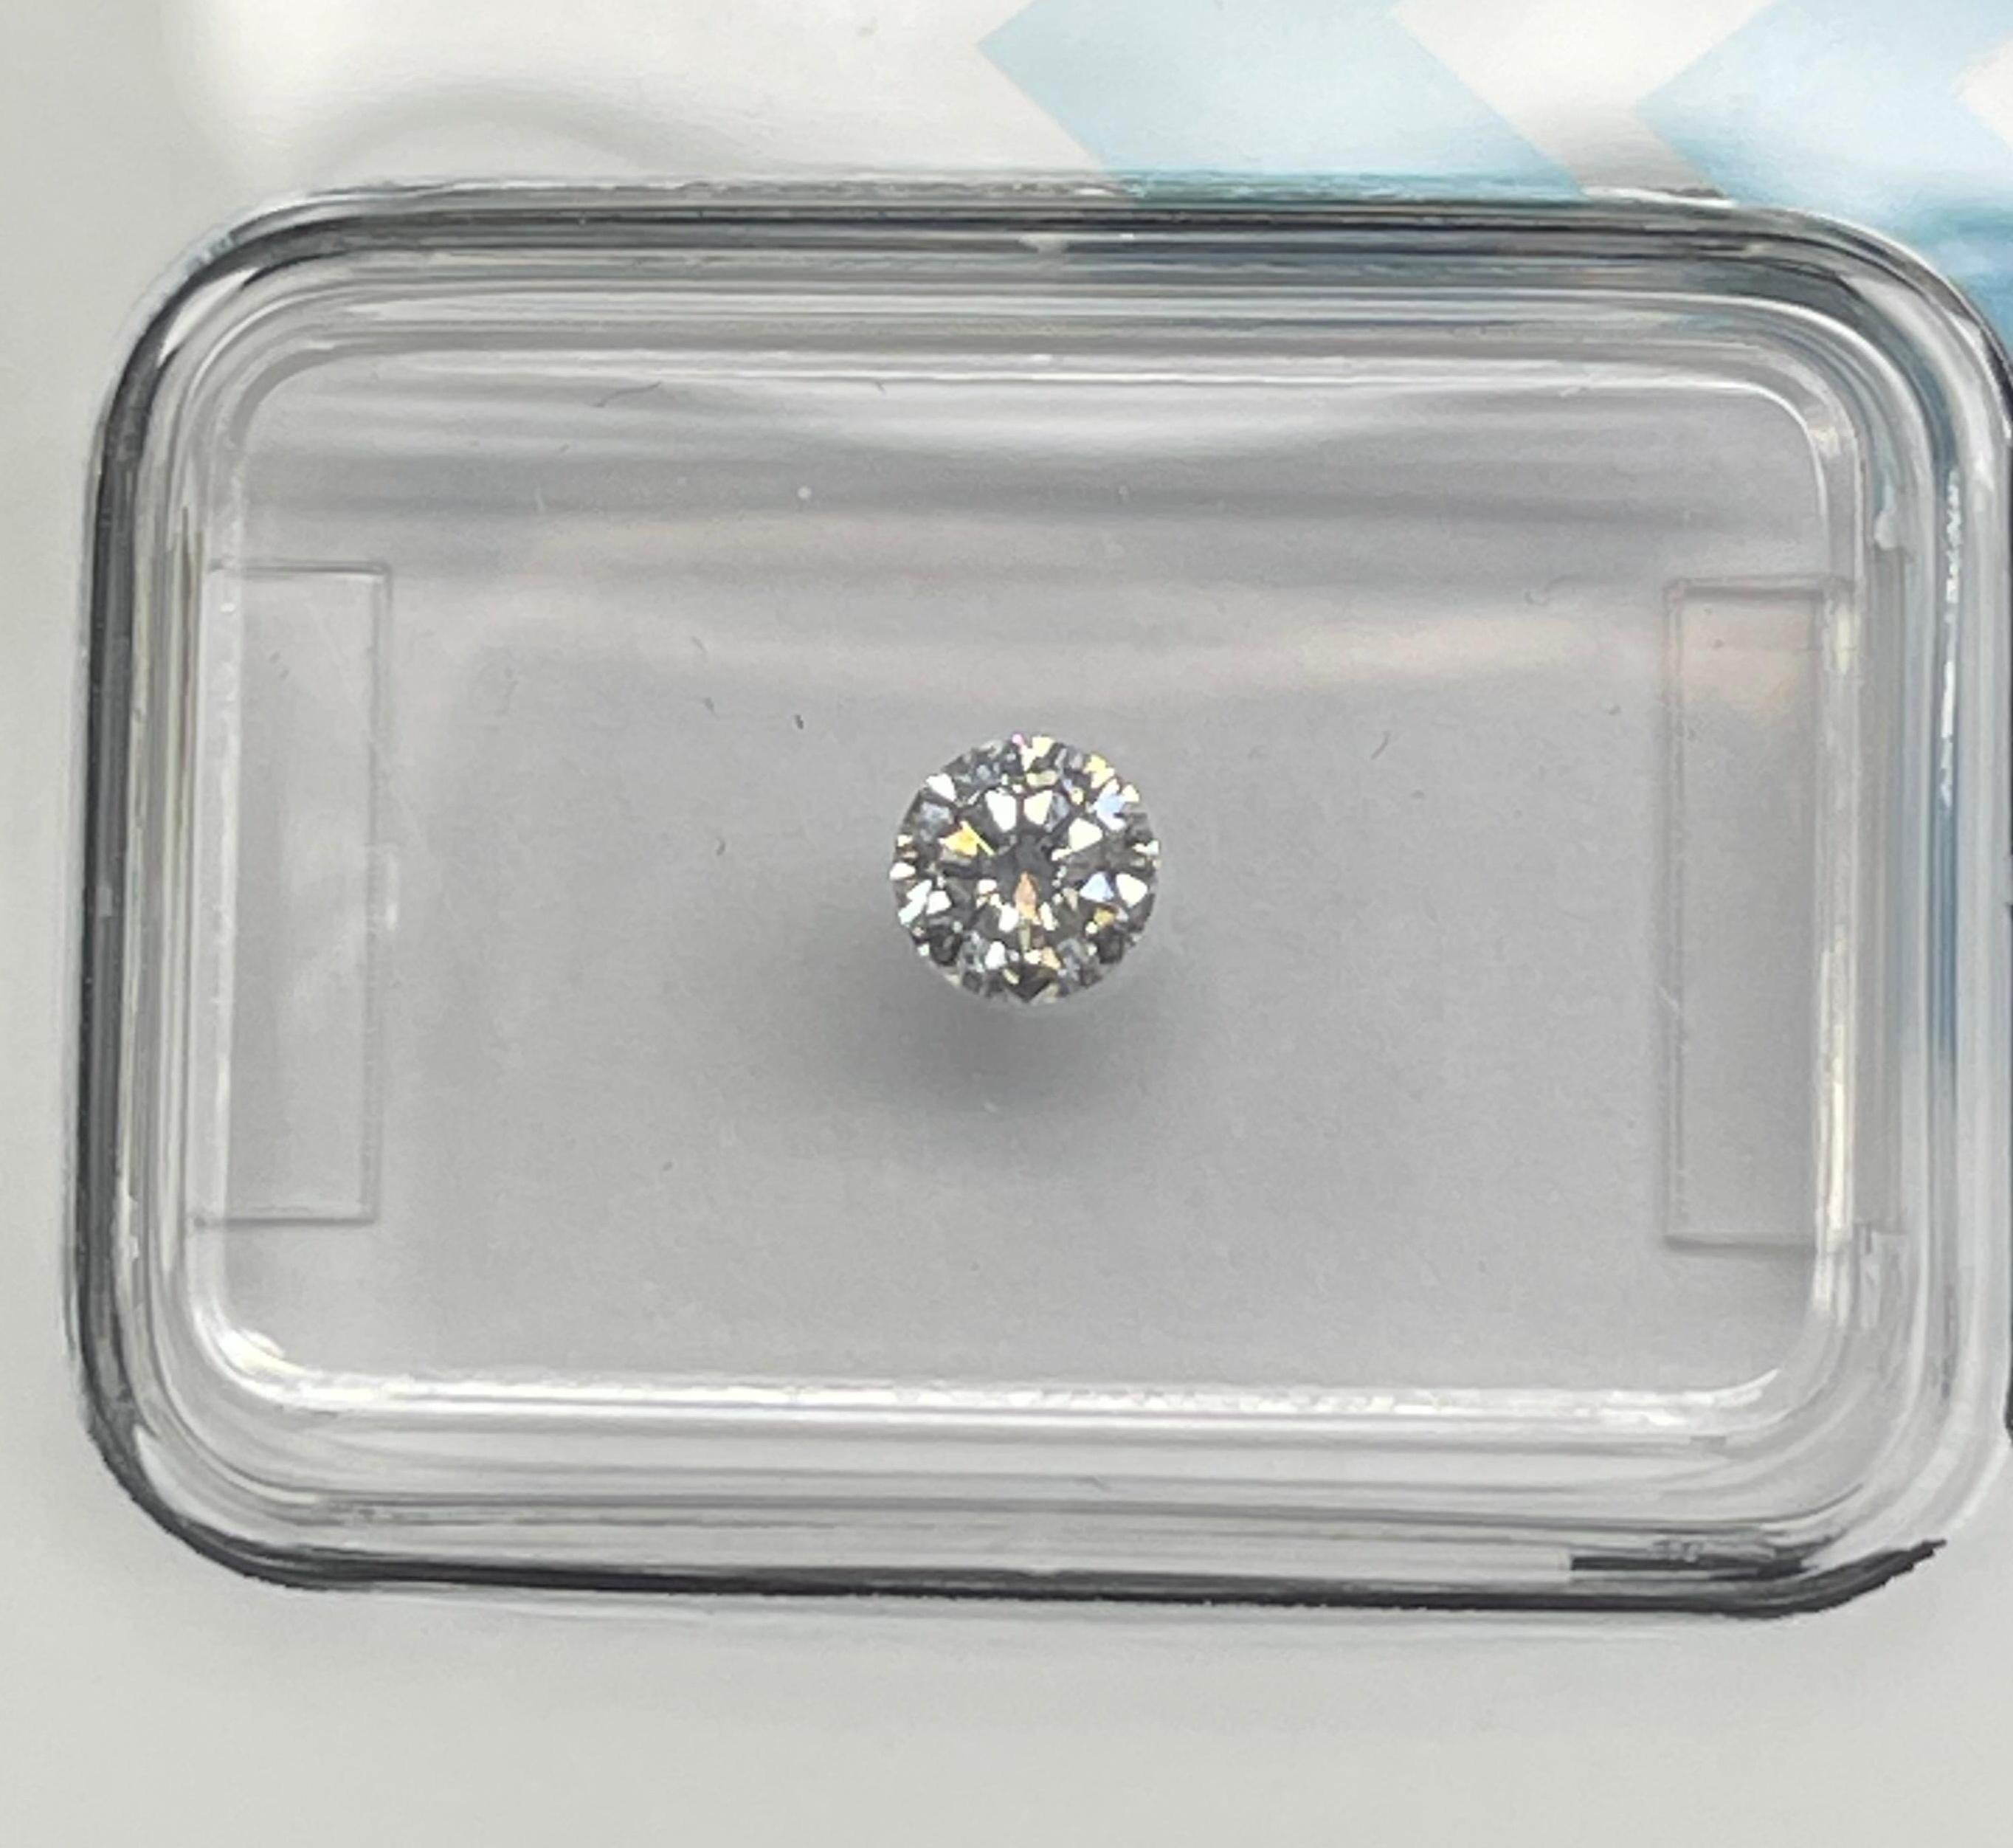 Natural Diamond graded by IGI.

Shape: Round Brilliant
Weight: 0.23 CT
Color: D
Clarity: VVS2
Cut: Very Good
Polish: Very Good
Symmetry: Excellent
Fluorescence: None
Laser inscription : IGI 630434205